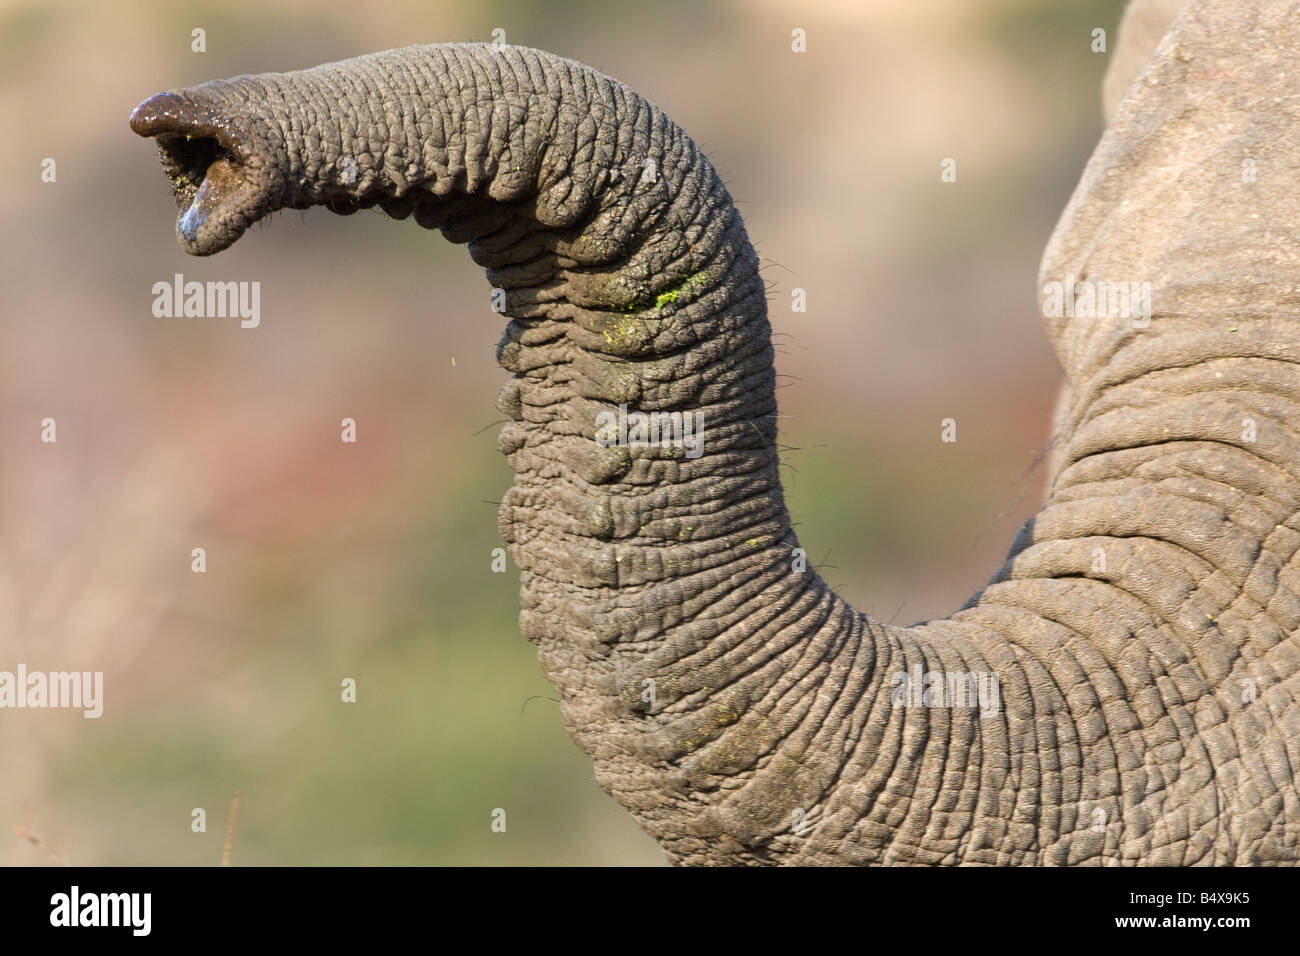 Close up of elephant’s trunk Stock Photo